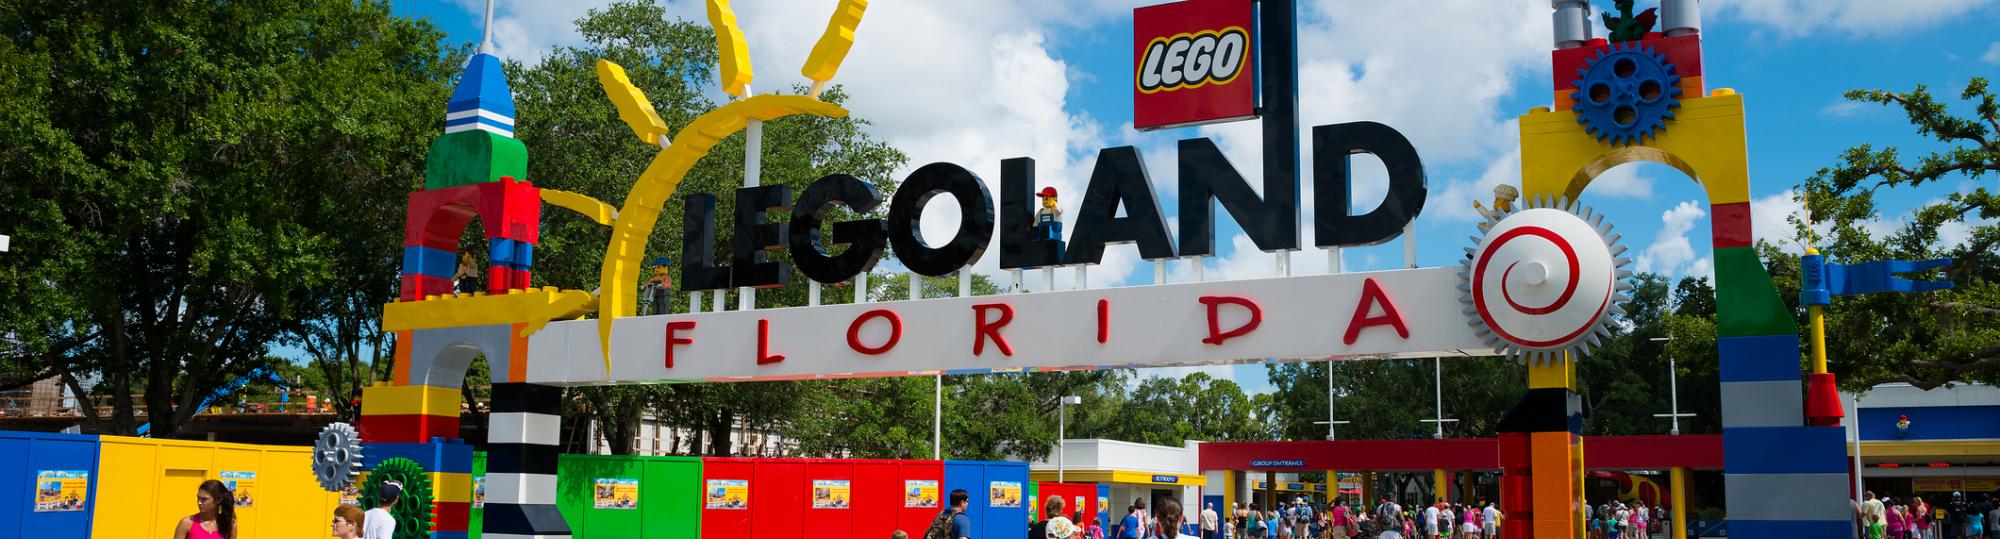 Legoland Florida Military Discount with Veterans Advantage